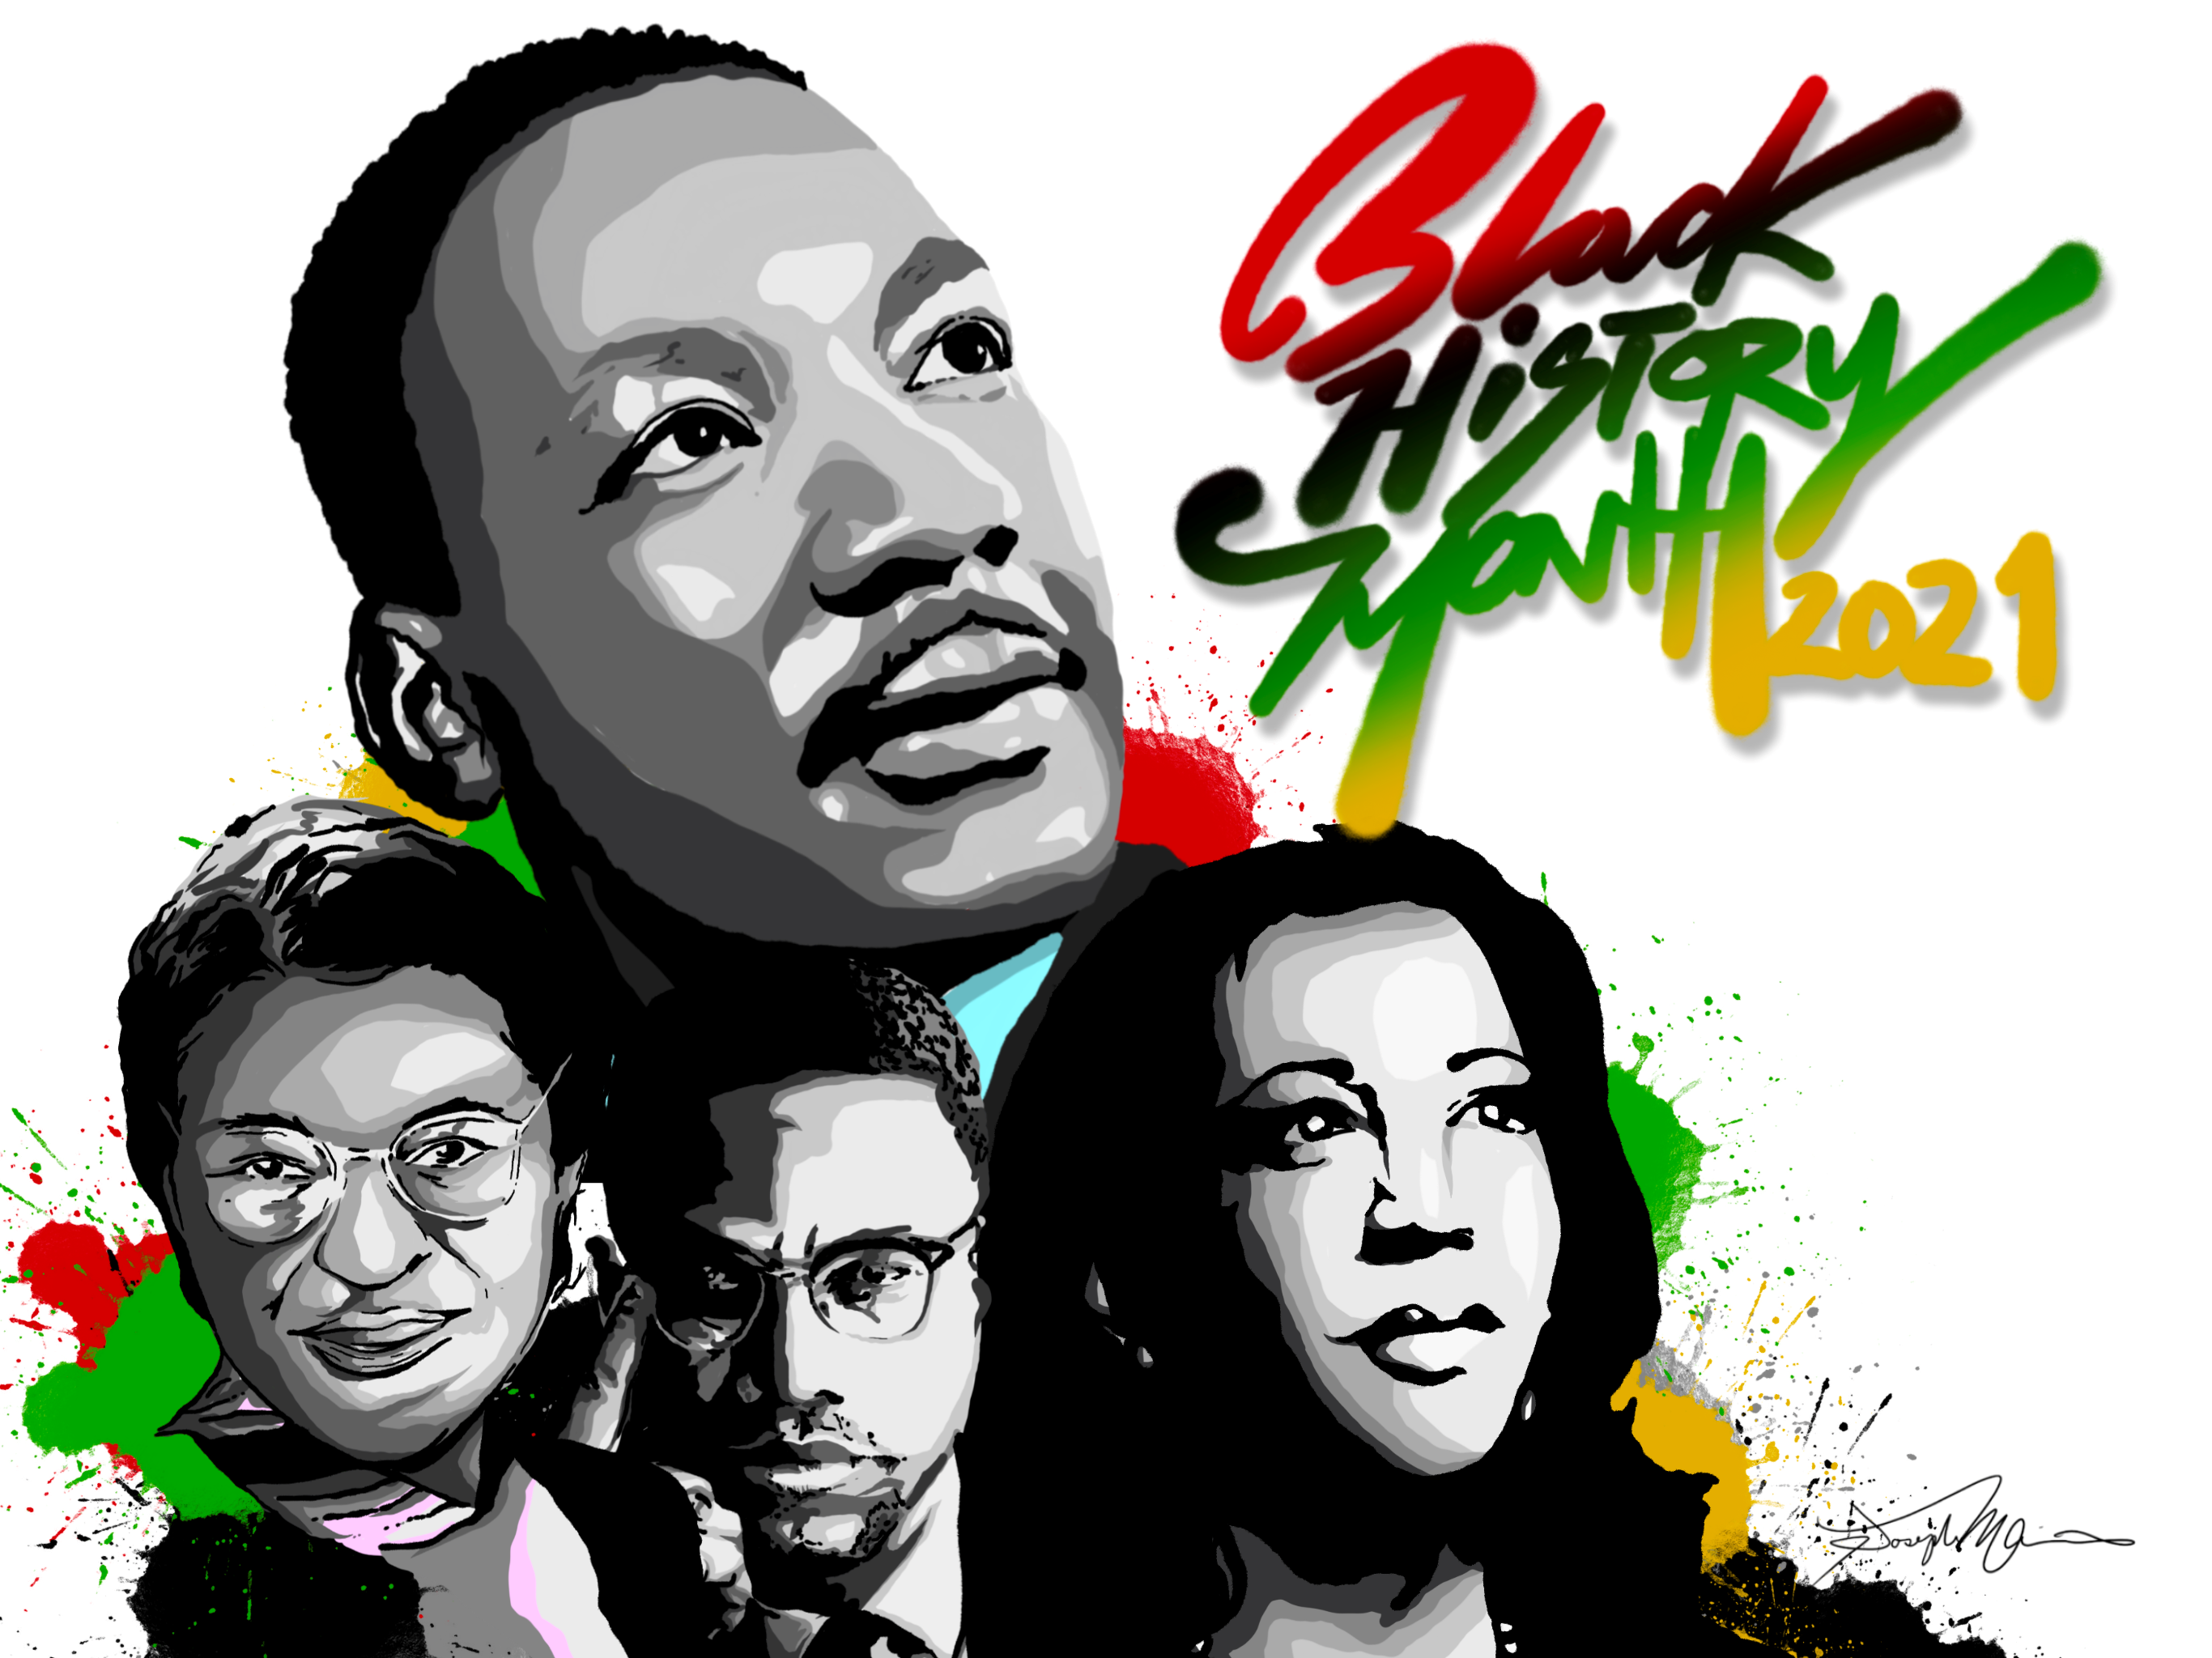 Black History Month 2021 artwork